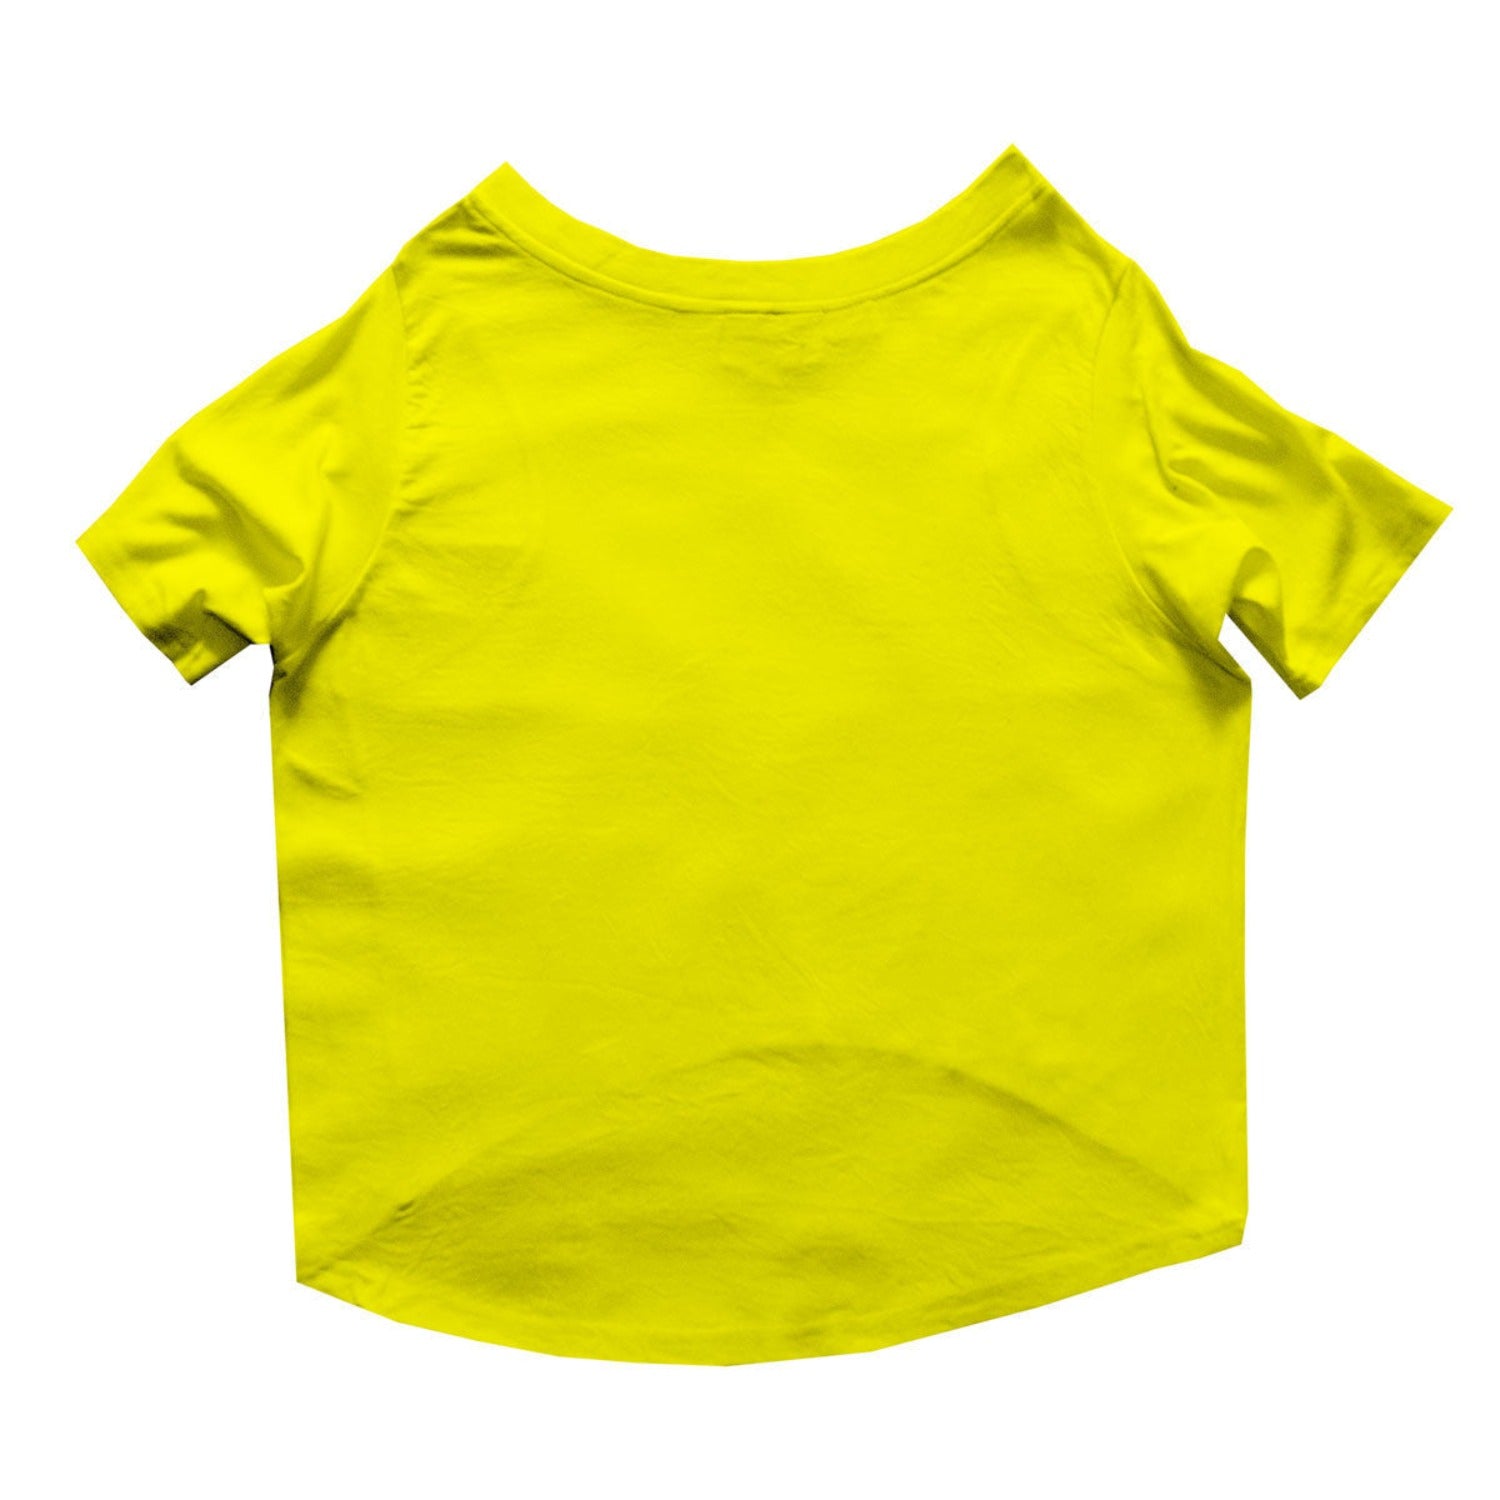 Ruse / Yellow Ruse Basic Crew Neck "Pool Party" Printed Half Sleeves Dog Tee17